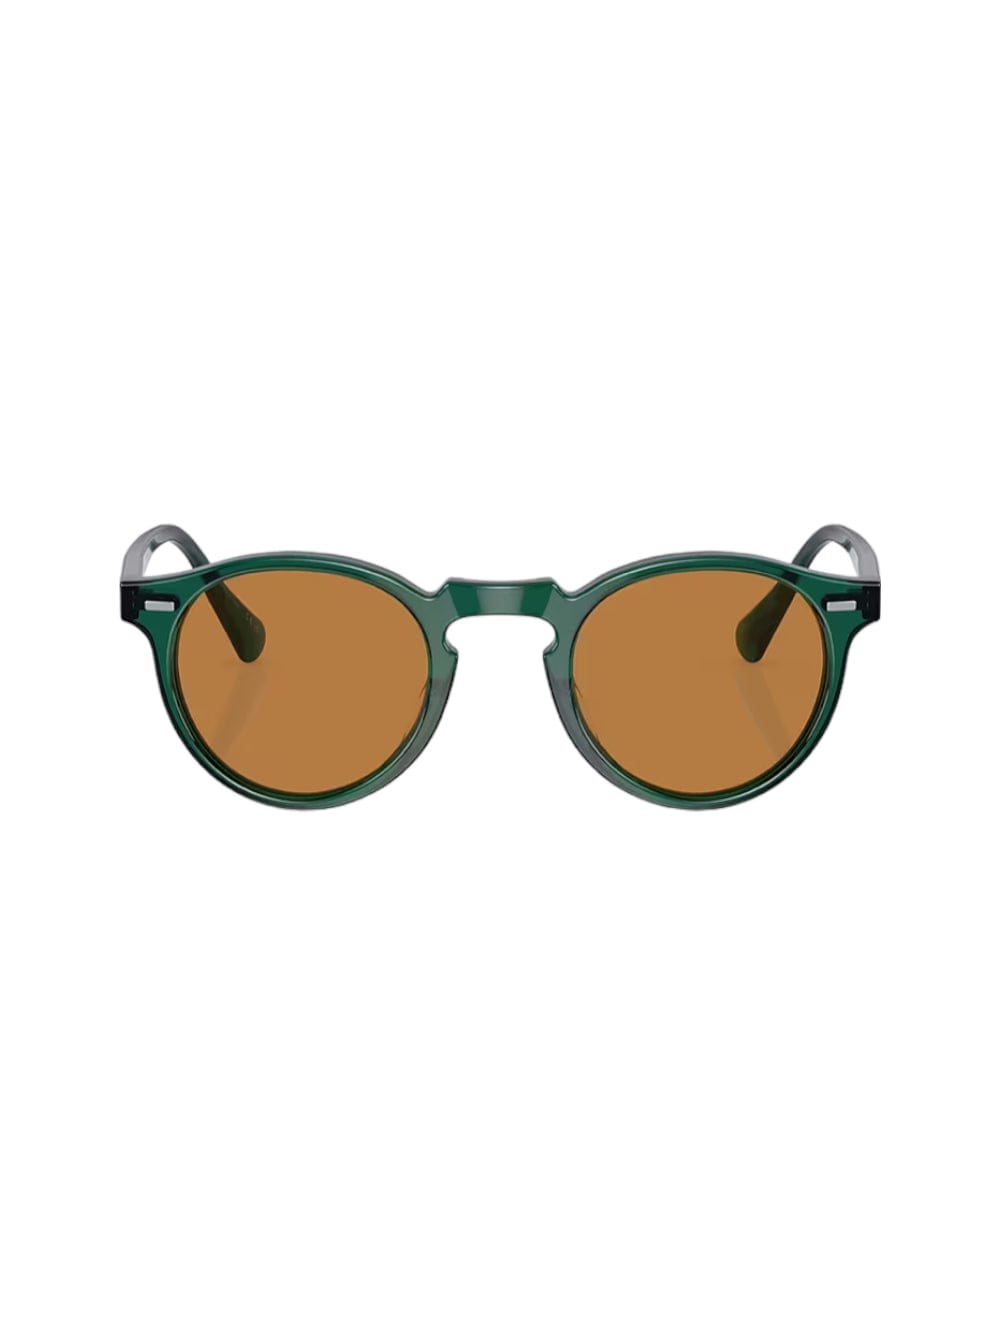 Shop Oliver Peoples Gregory Peck Sun Sunglasses